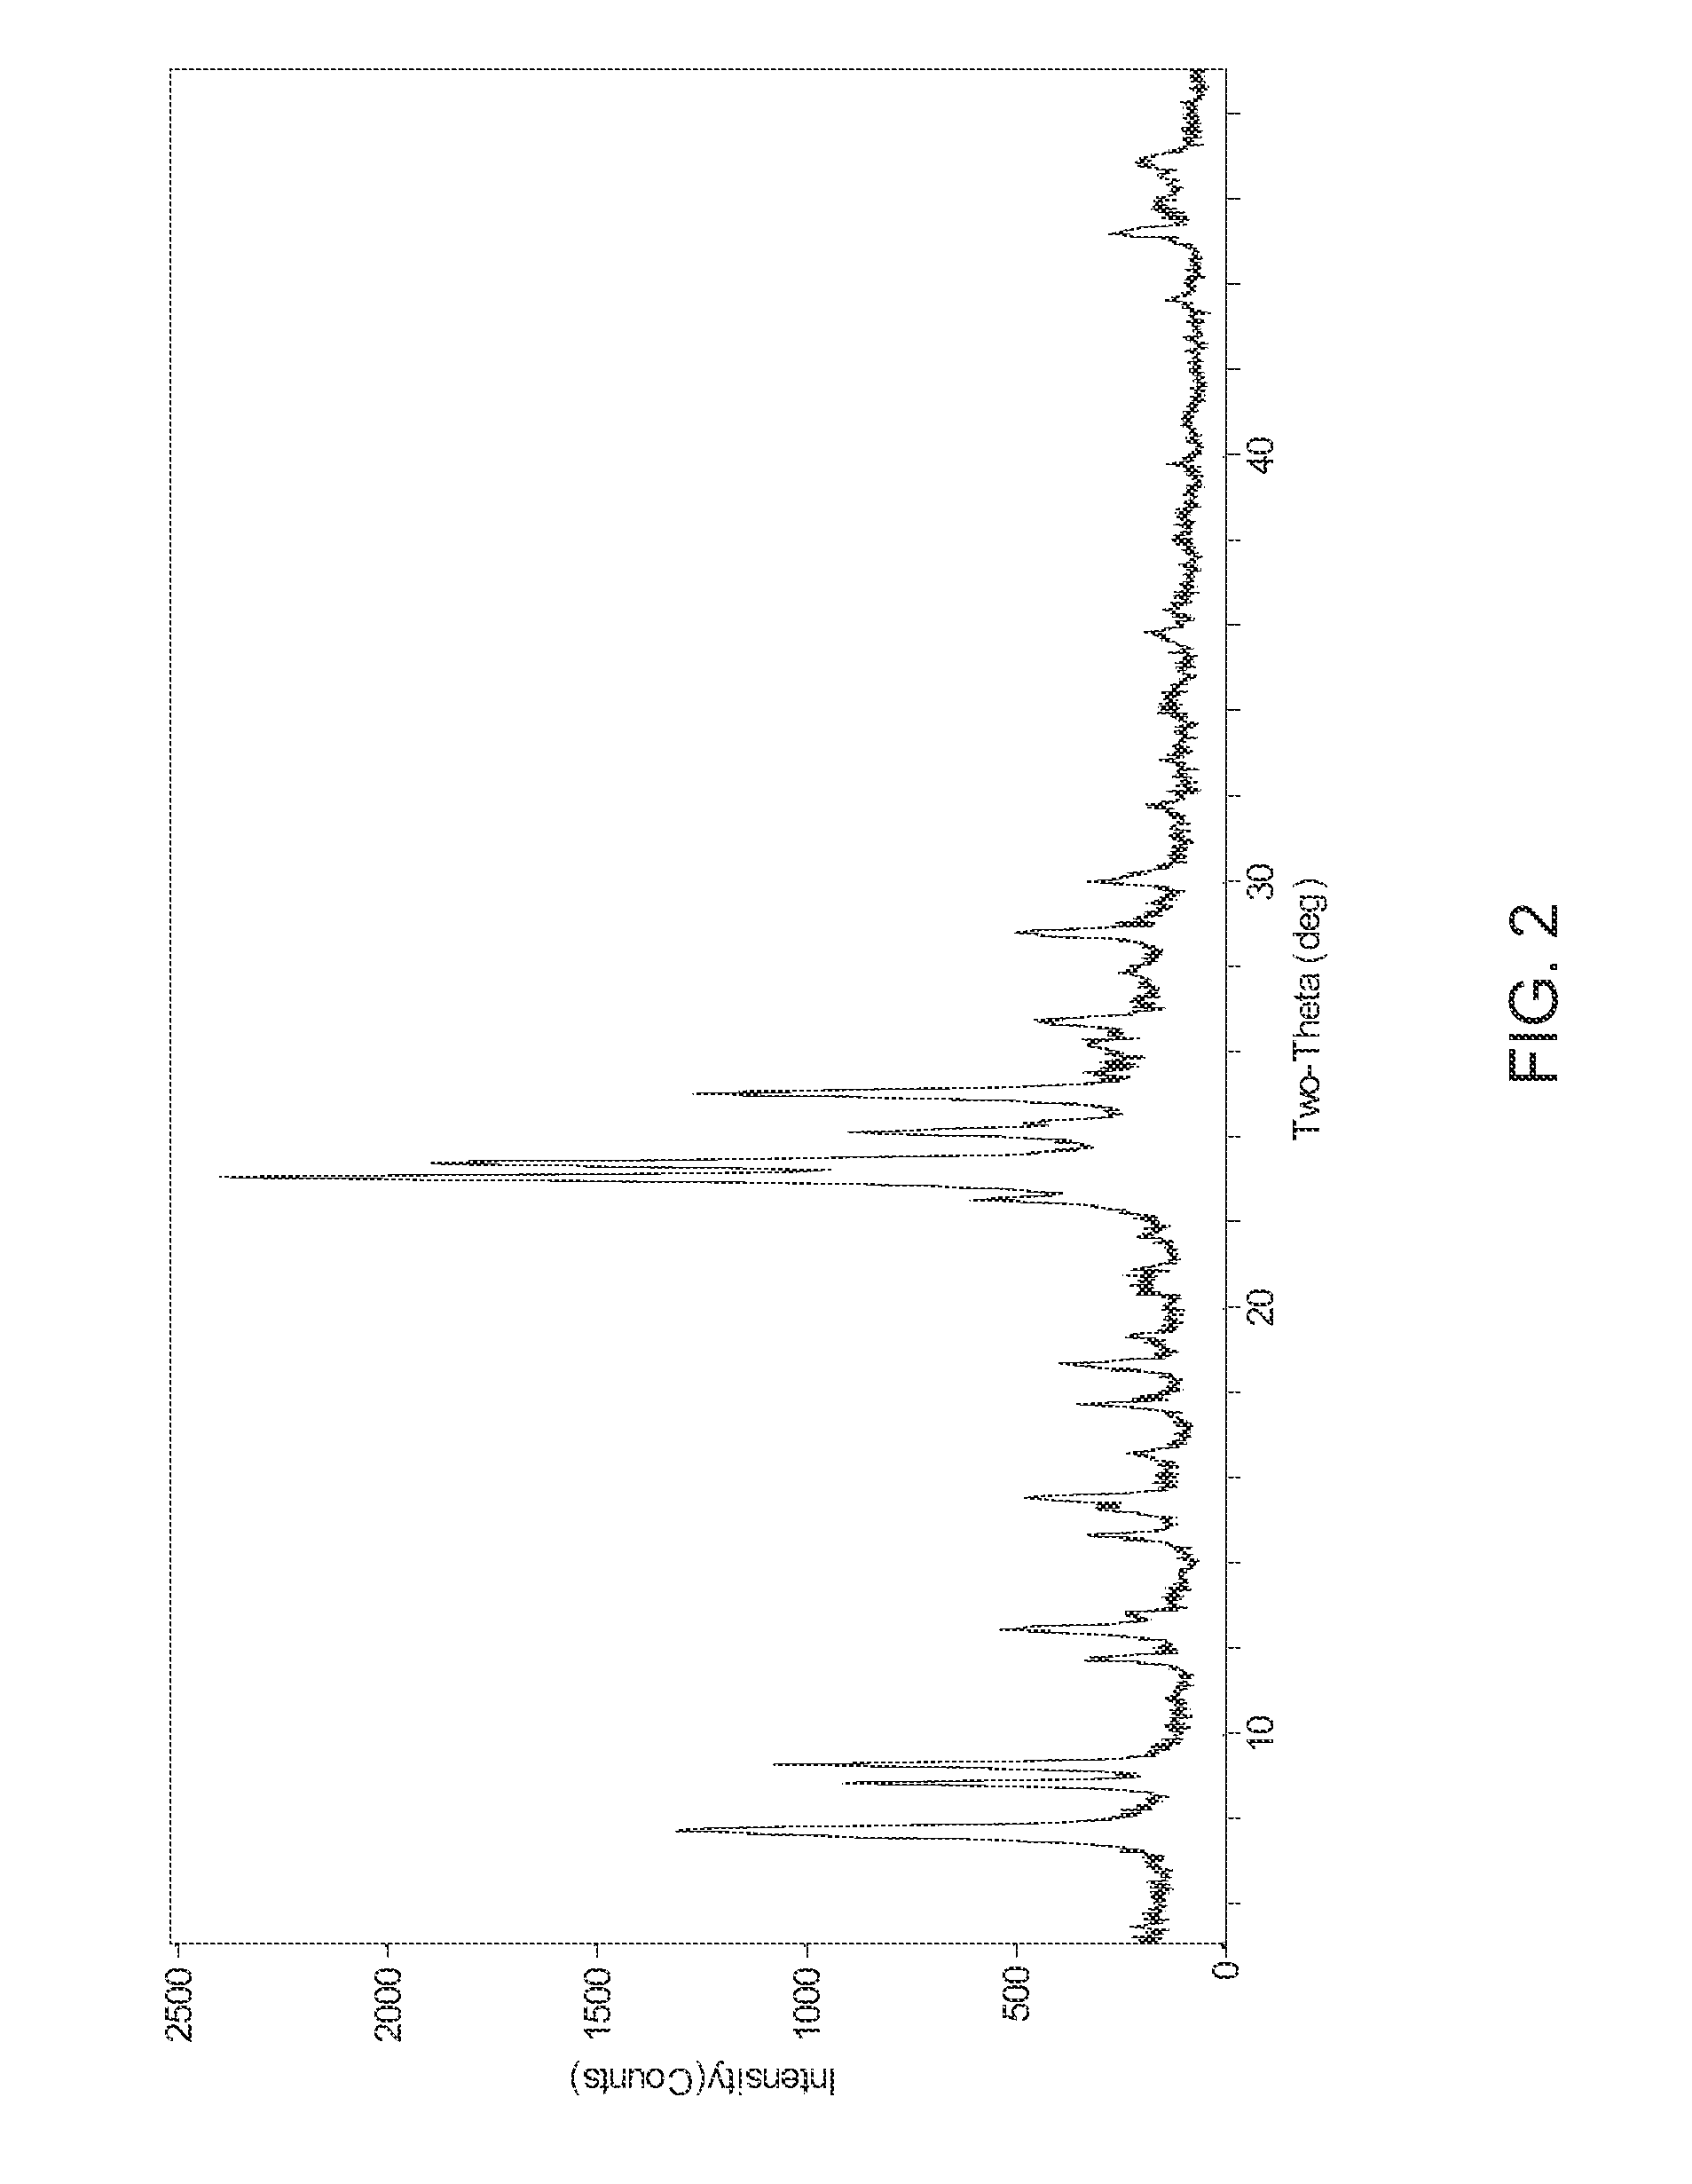 Dehydrocyclodimerization using uzm-44 aluminosilicate zeolite